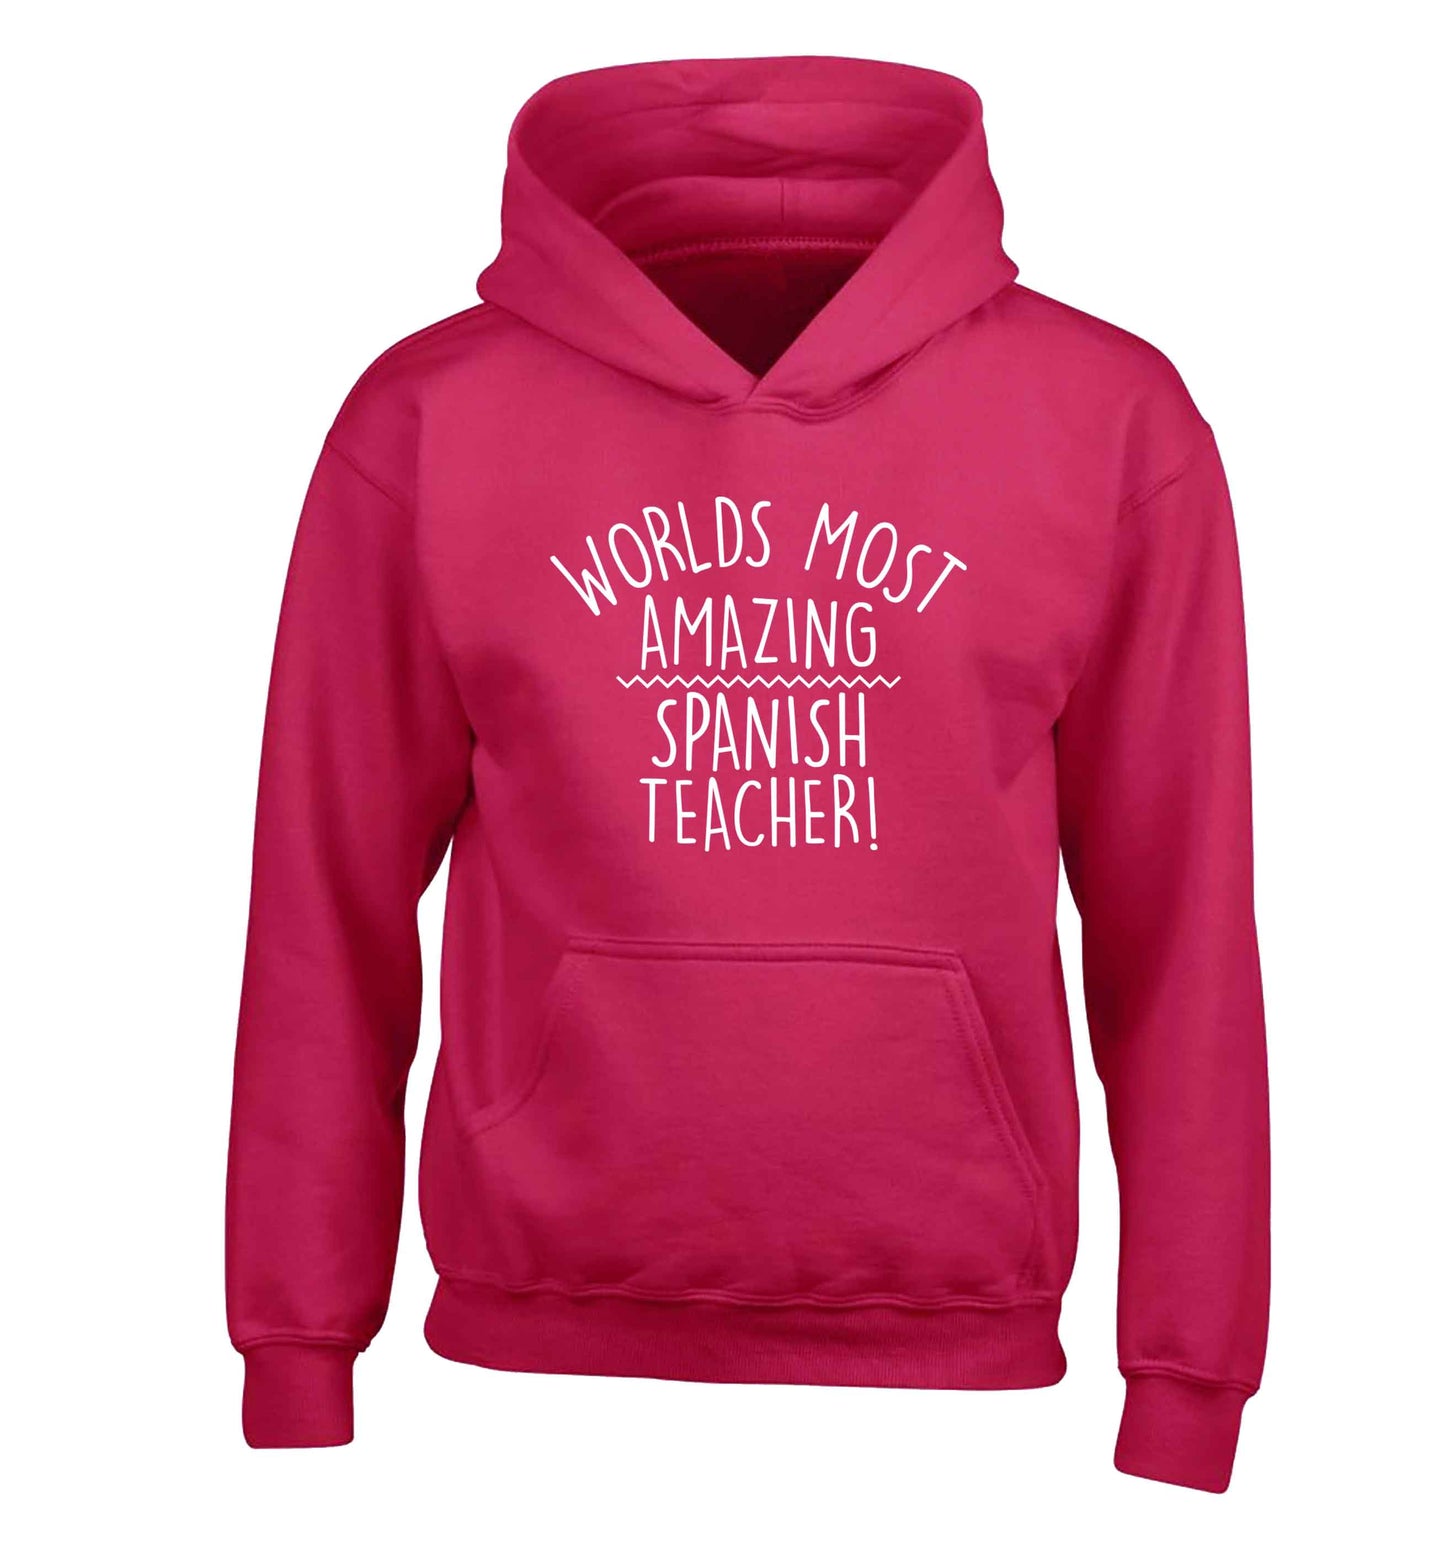 Worlds most amazing Spanish teacher children's pink hoodie 12-13 Years